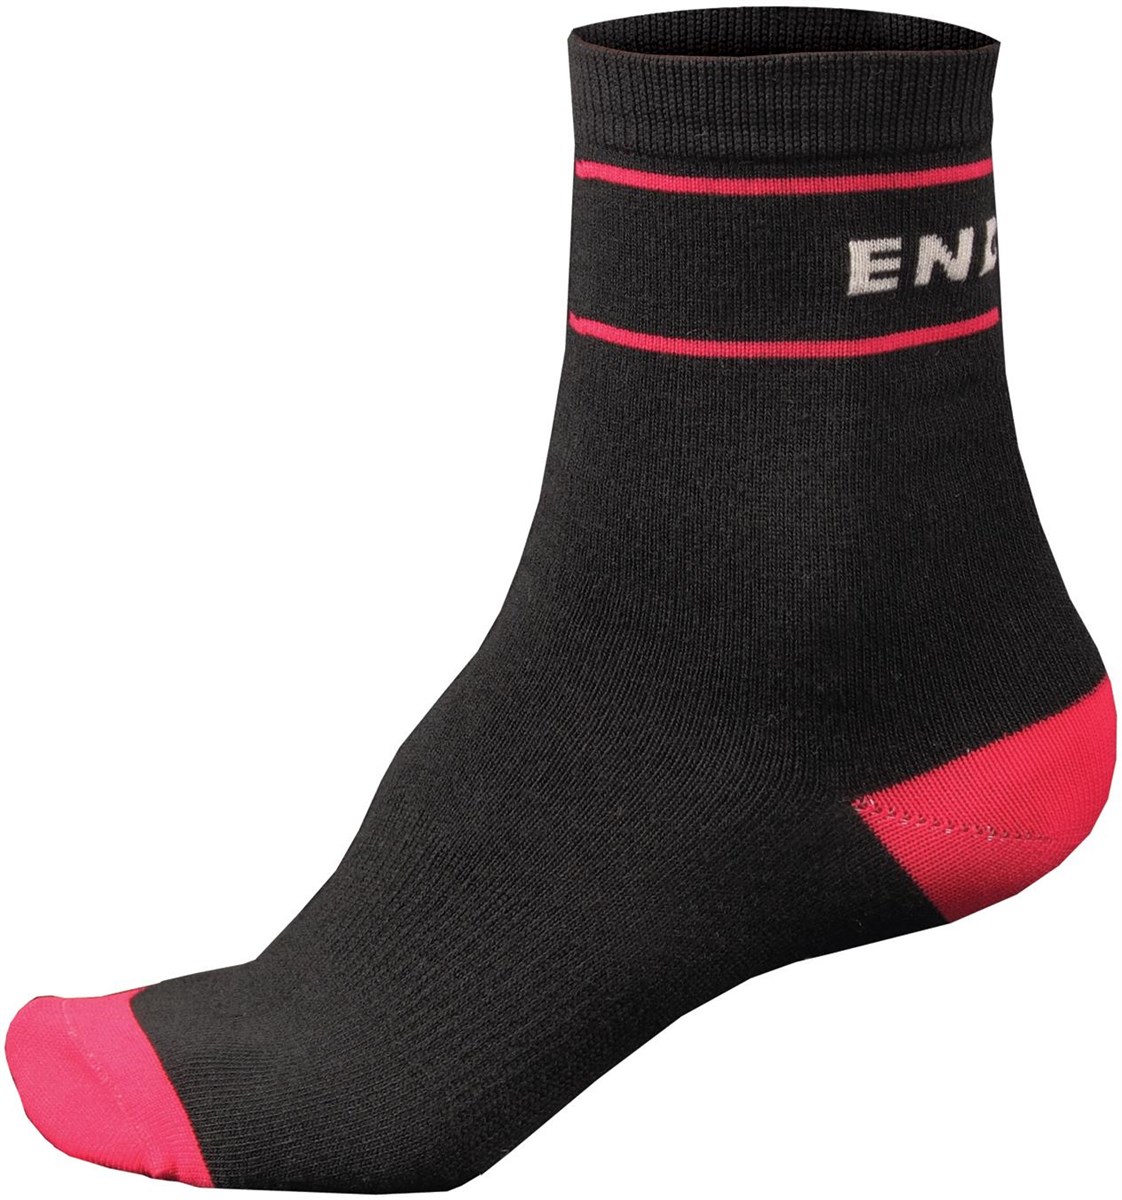 Endura Retro Womens Cycling Socks - Twin Pack product image